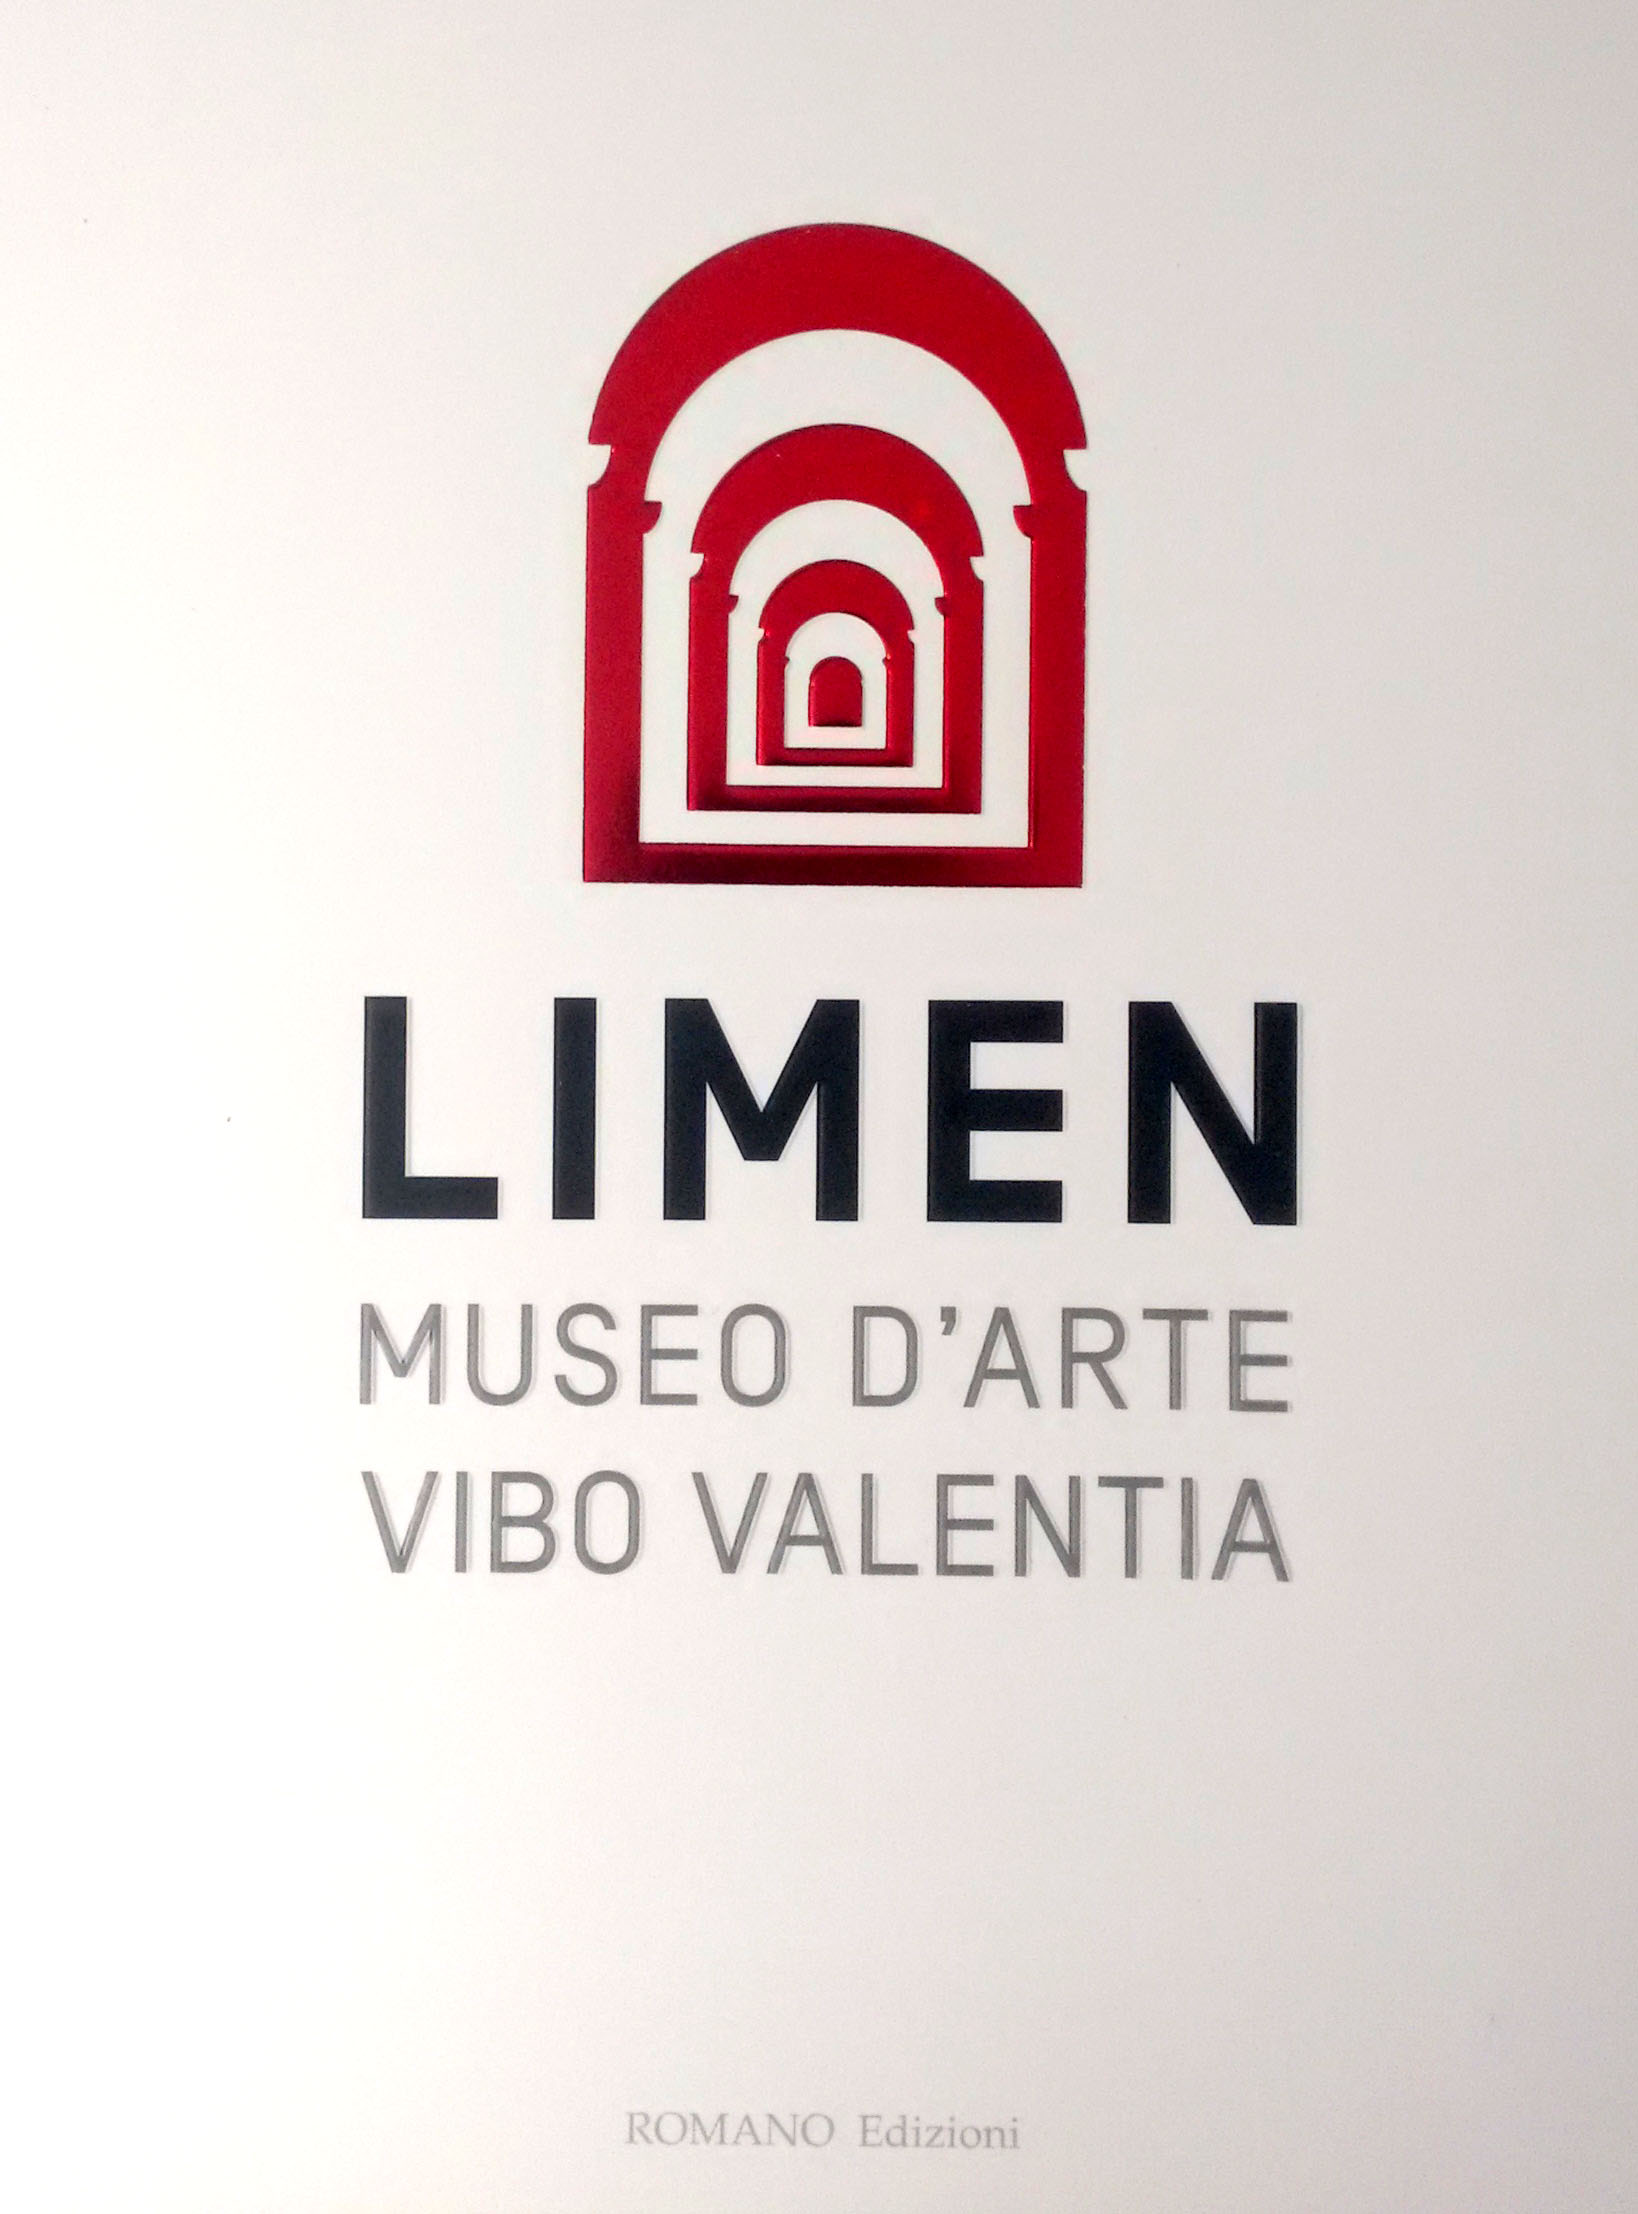 Limen - Museo d'arte Vibo Valentia|Limen - Vibo Valentia art museum